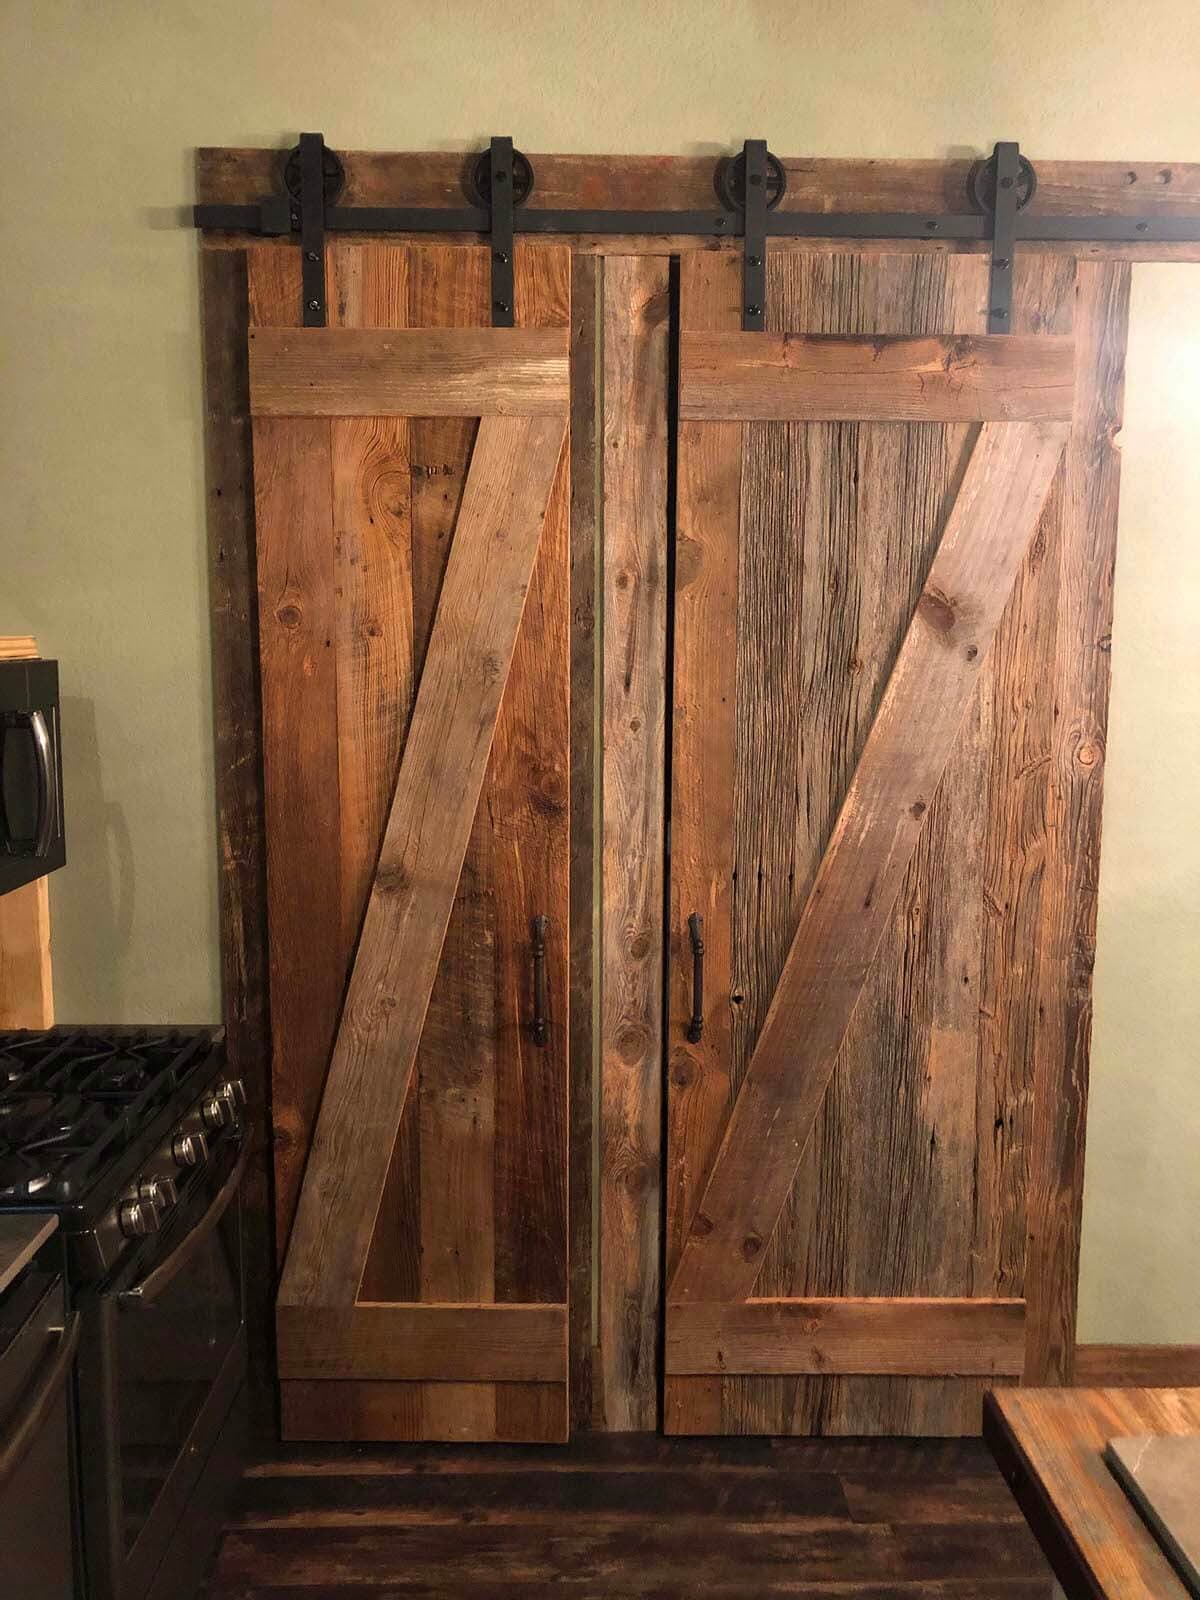 Rustic sliding barn door made from reclaimed wood.